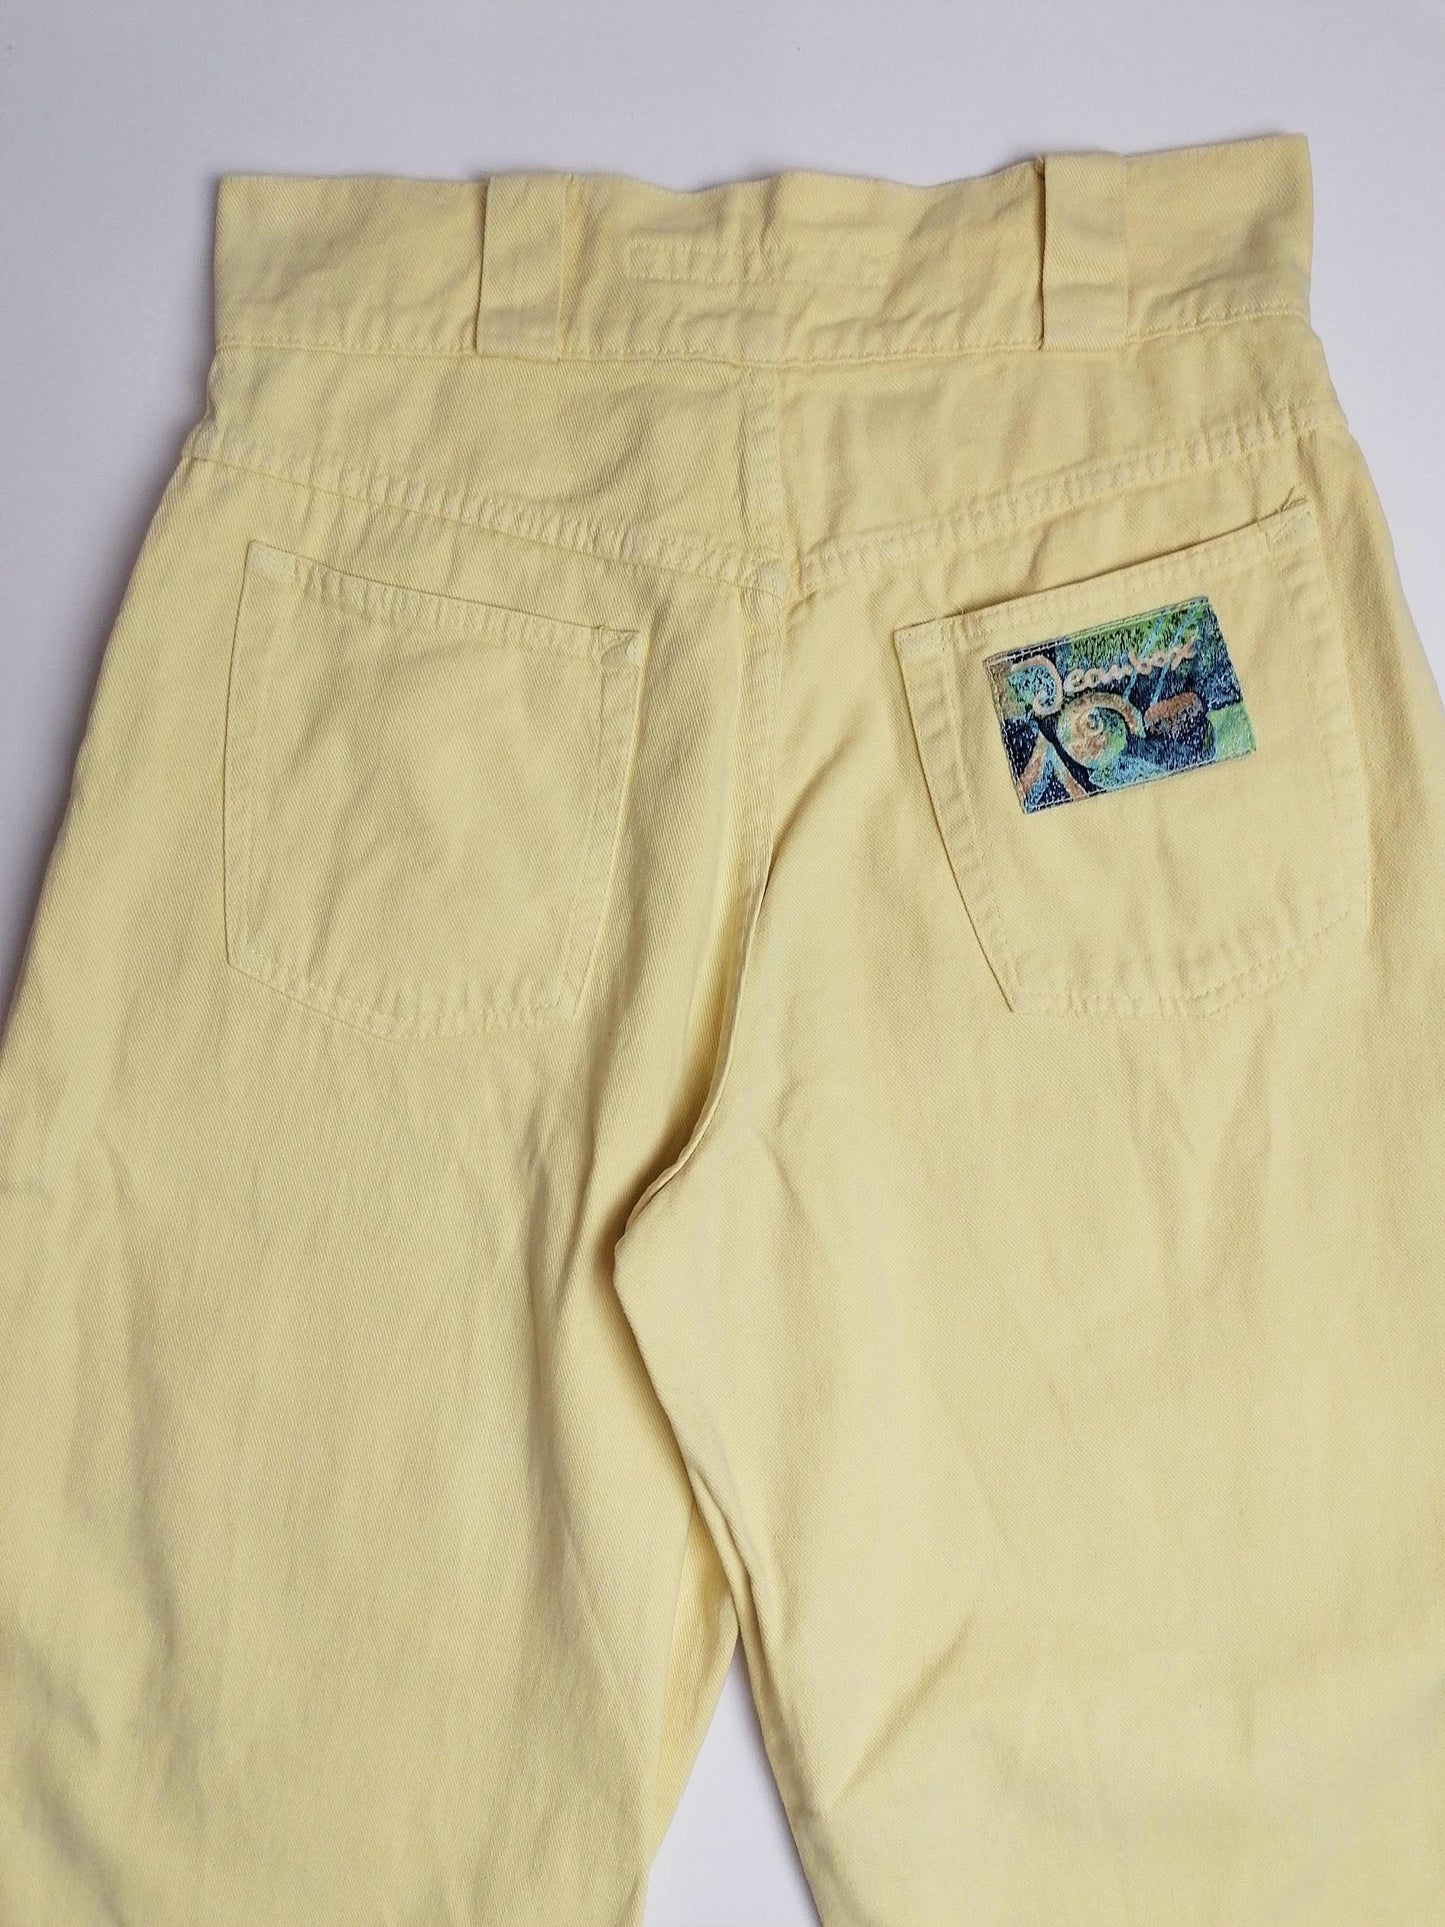 90's JEANBOX High Waist Baggy Jeans - size M-L